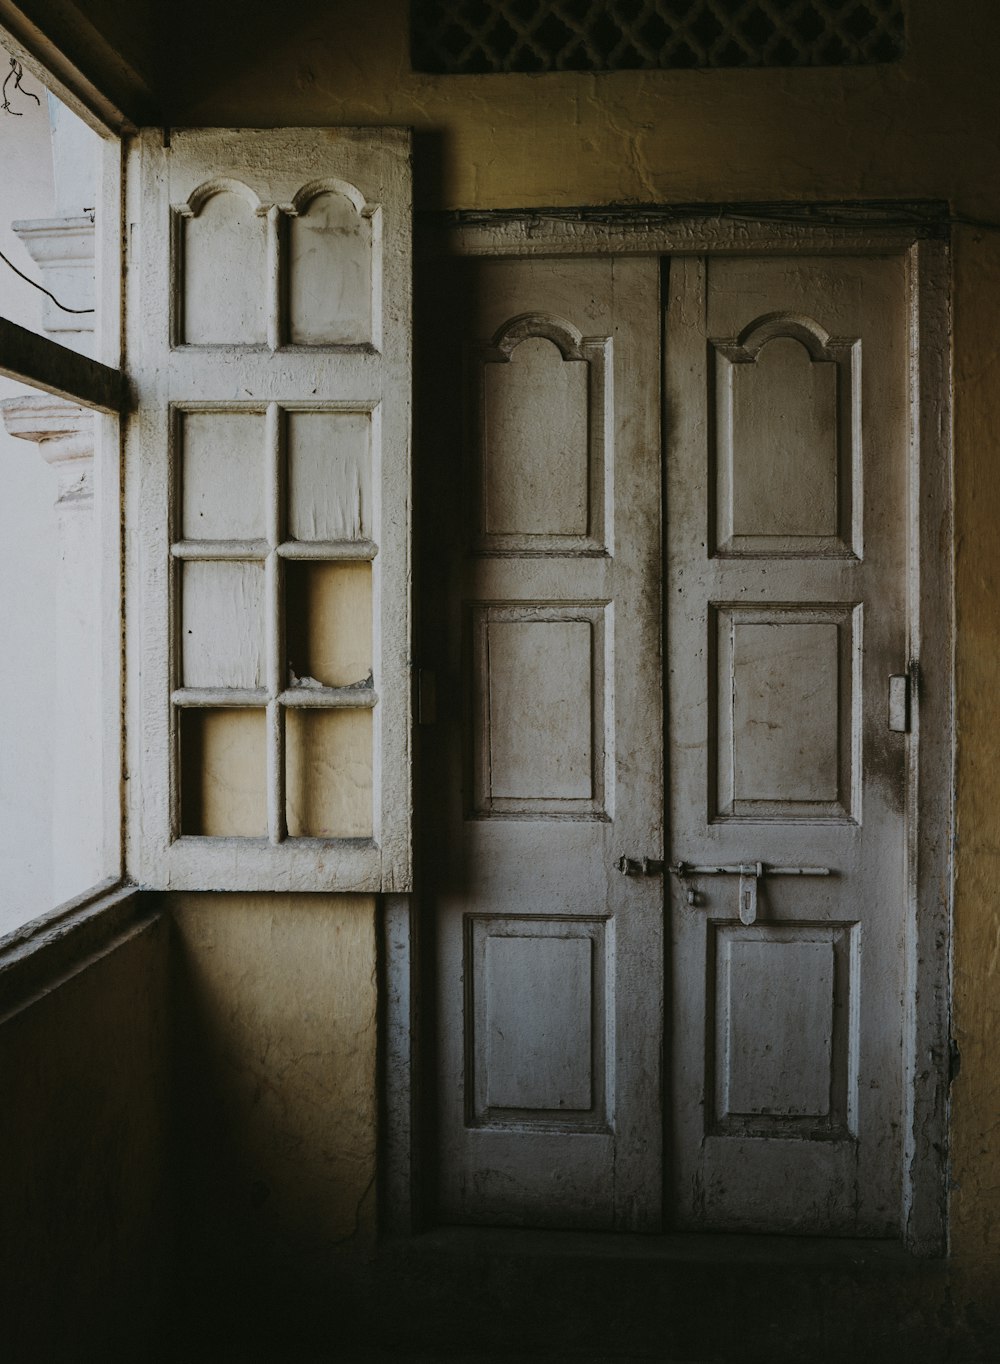 dos puertas cerradas de madera blanca